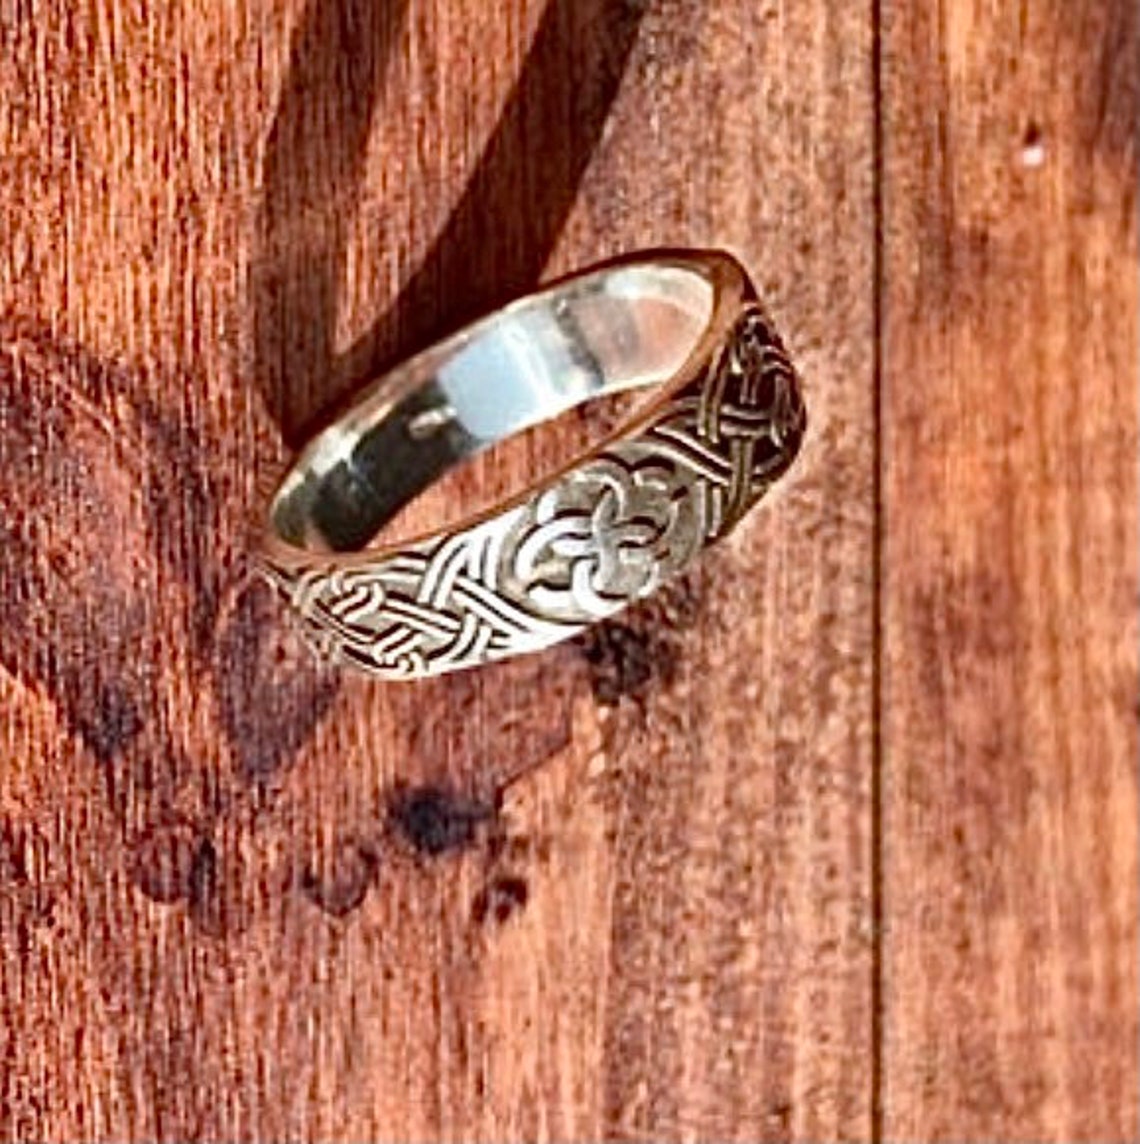 Silver wedding rings Celtic style Eternal love ethnic